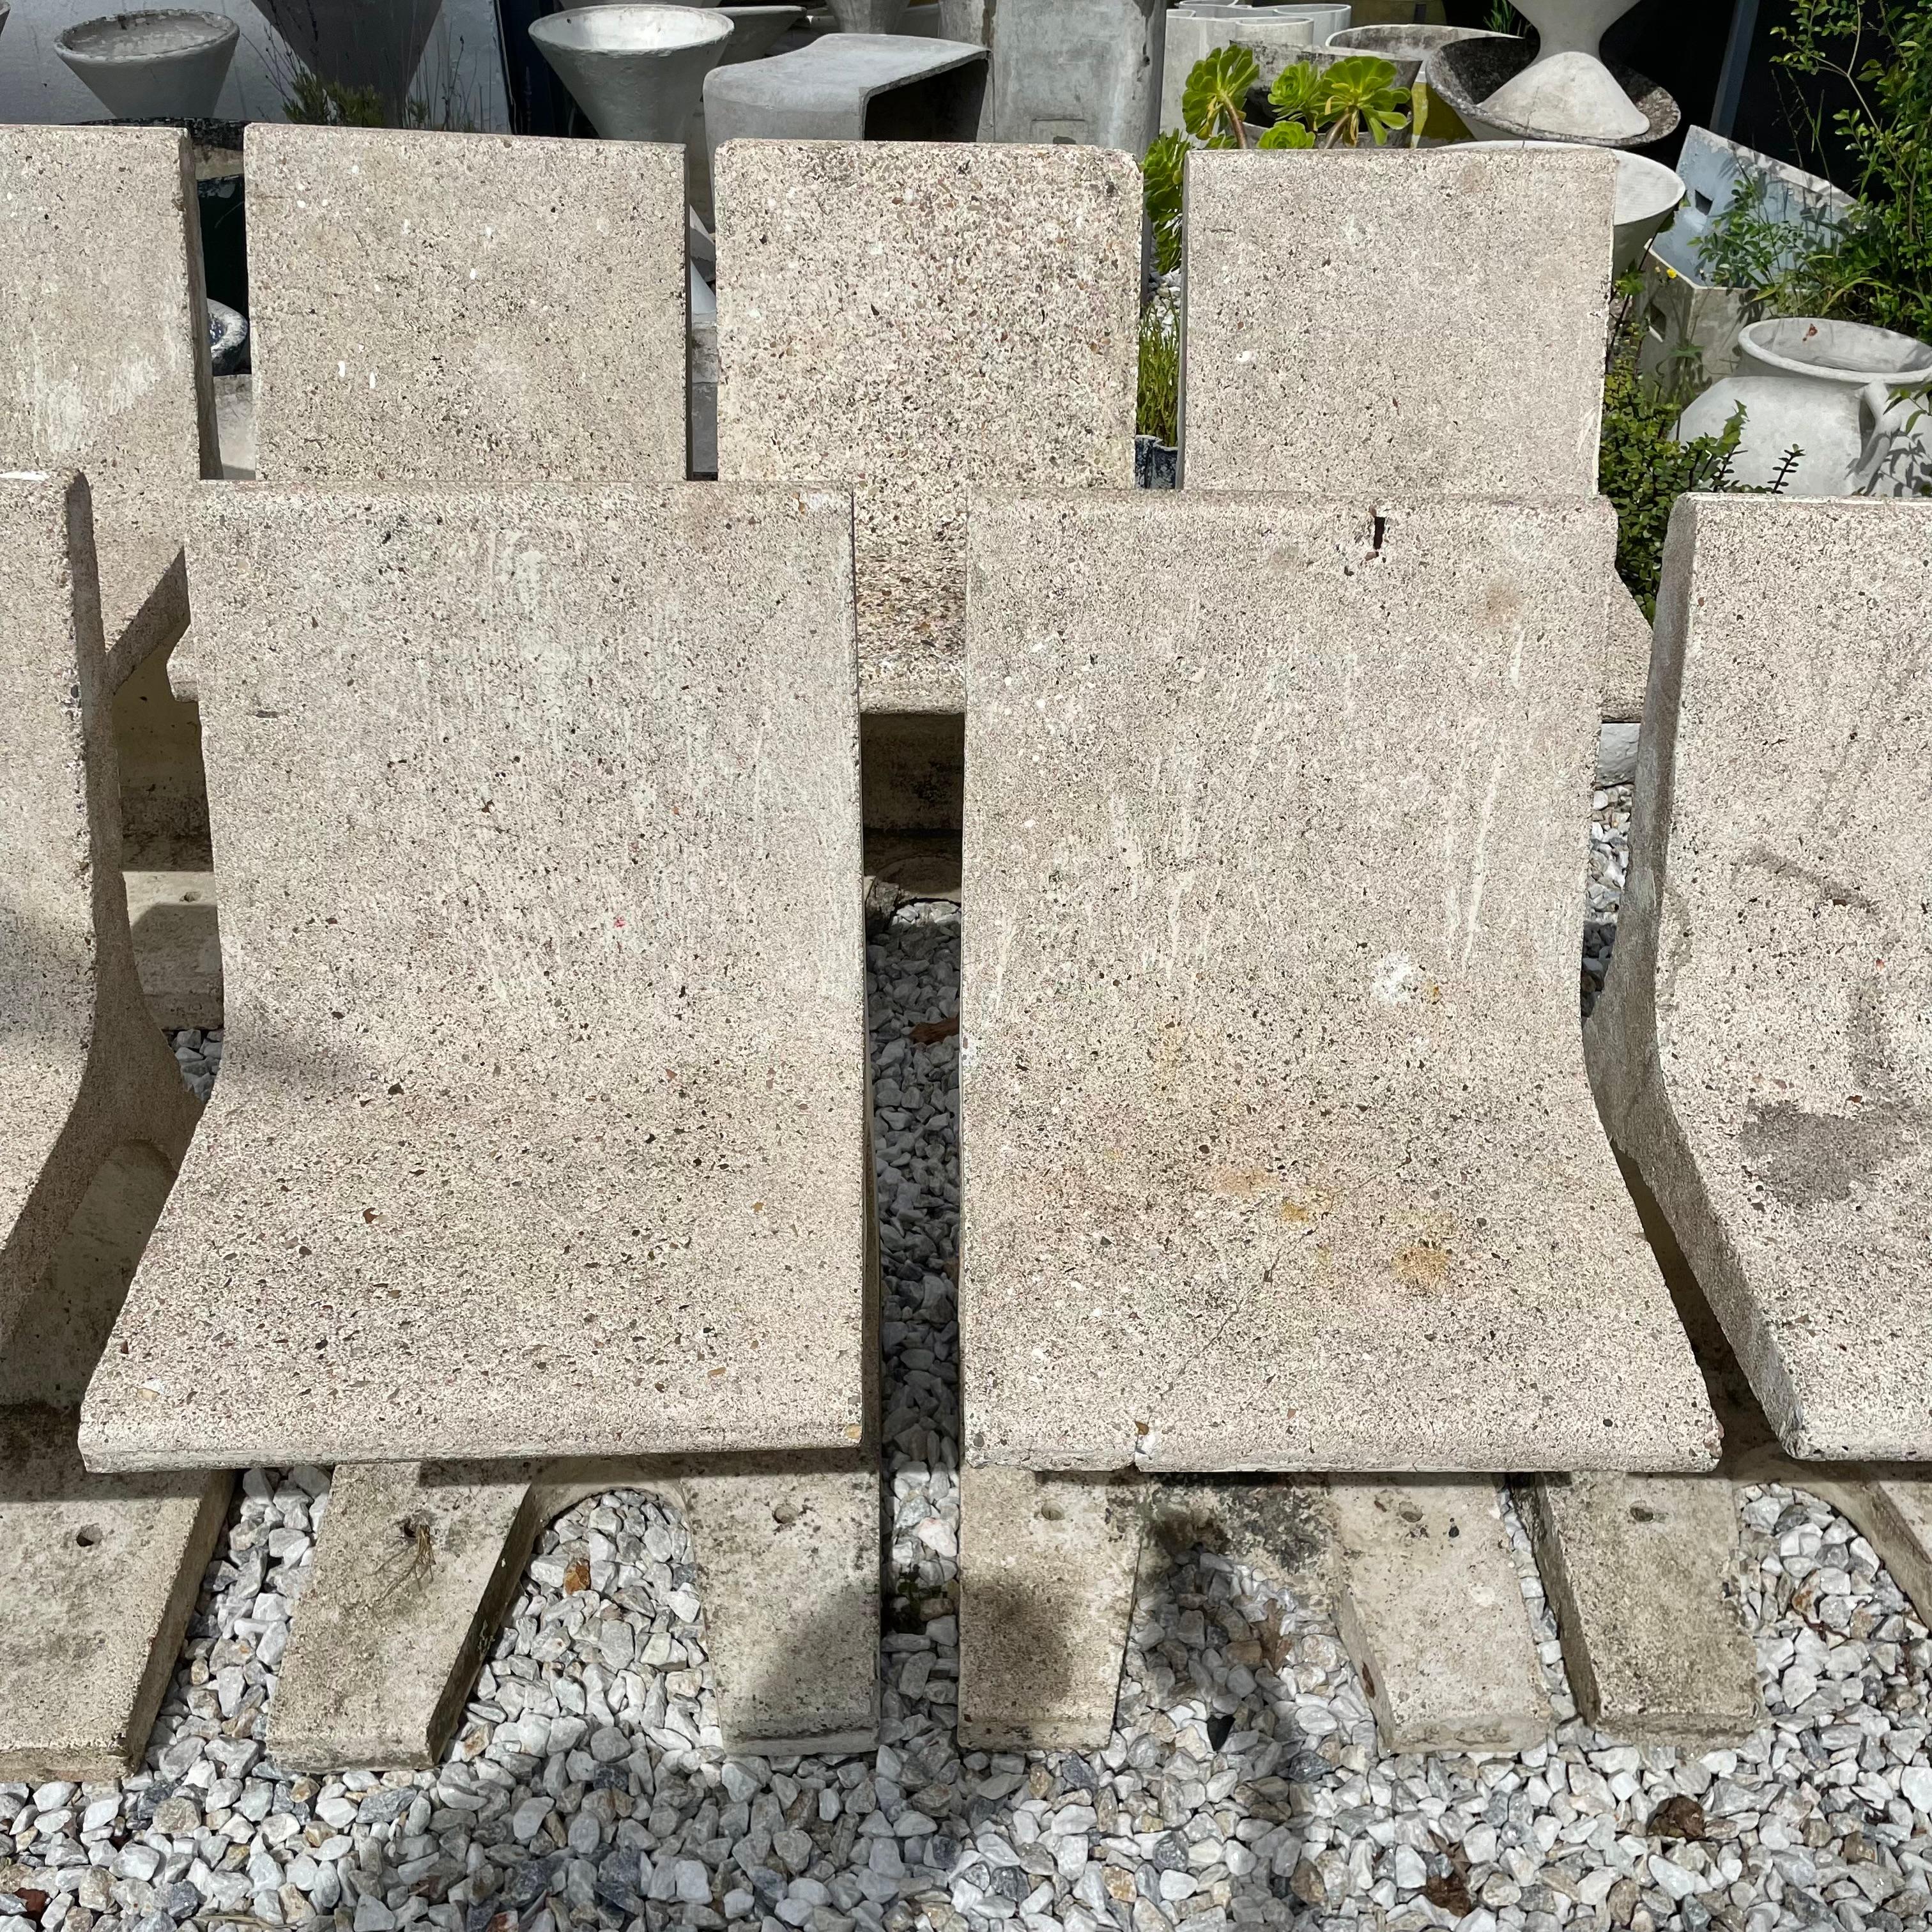 Monumental Concrete Sculptural Chairs, 1970s, France For Sale 1